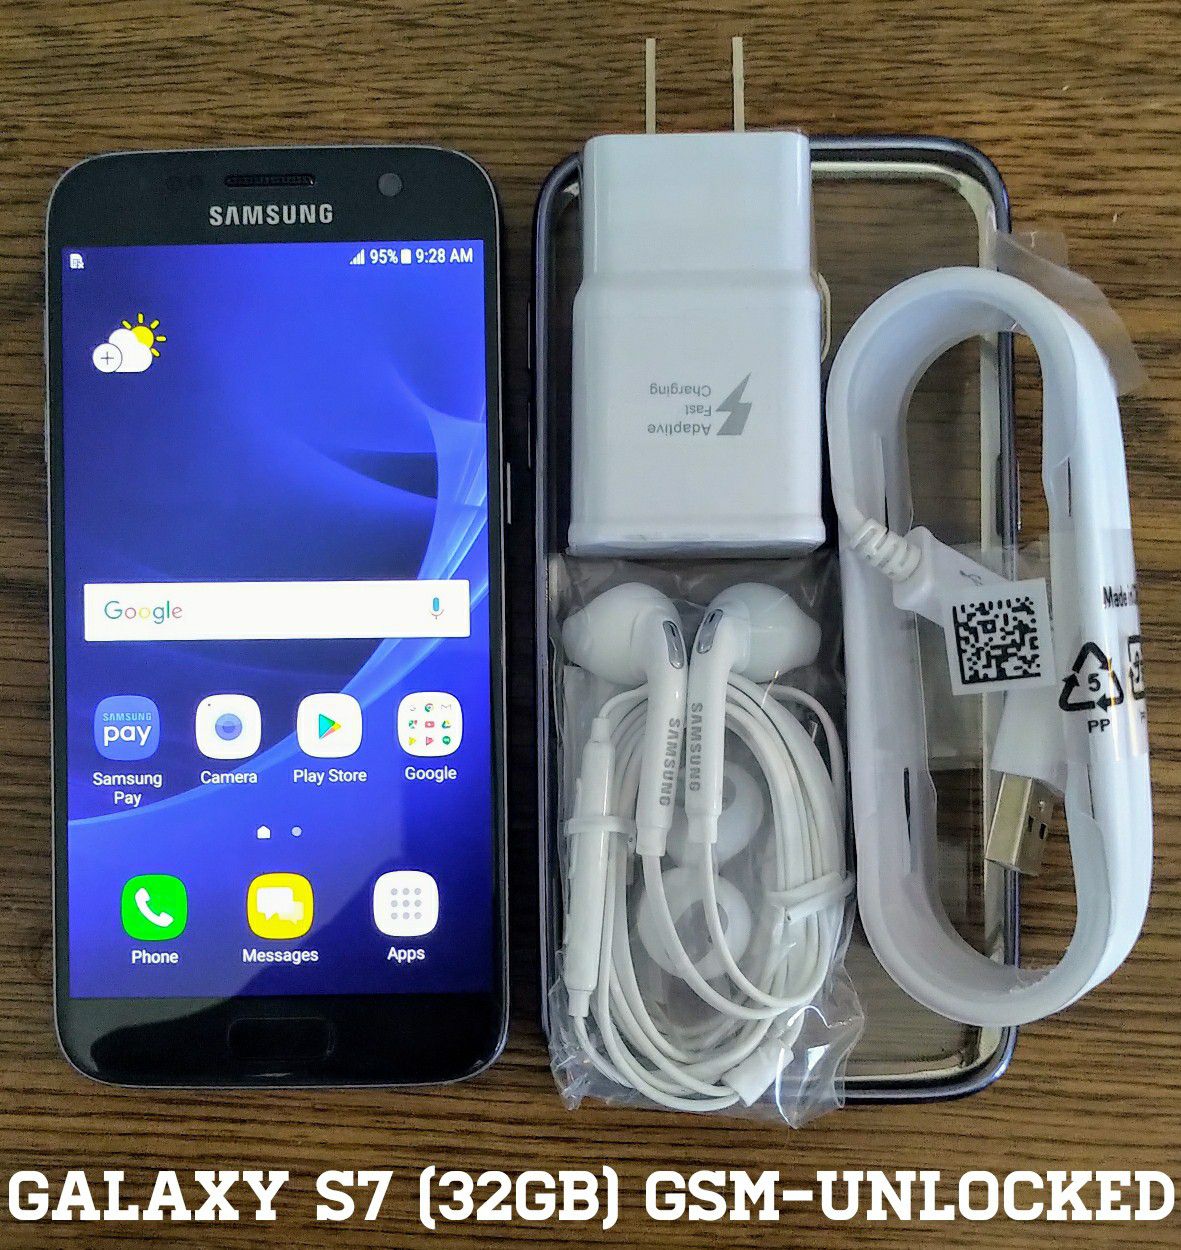 Galaxy S7 (32GB) GSM-UNLOCKED + Accessories